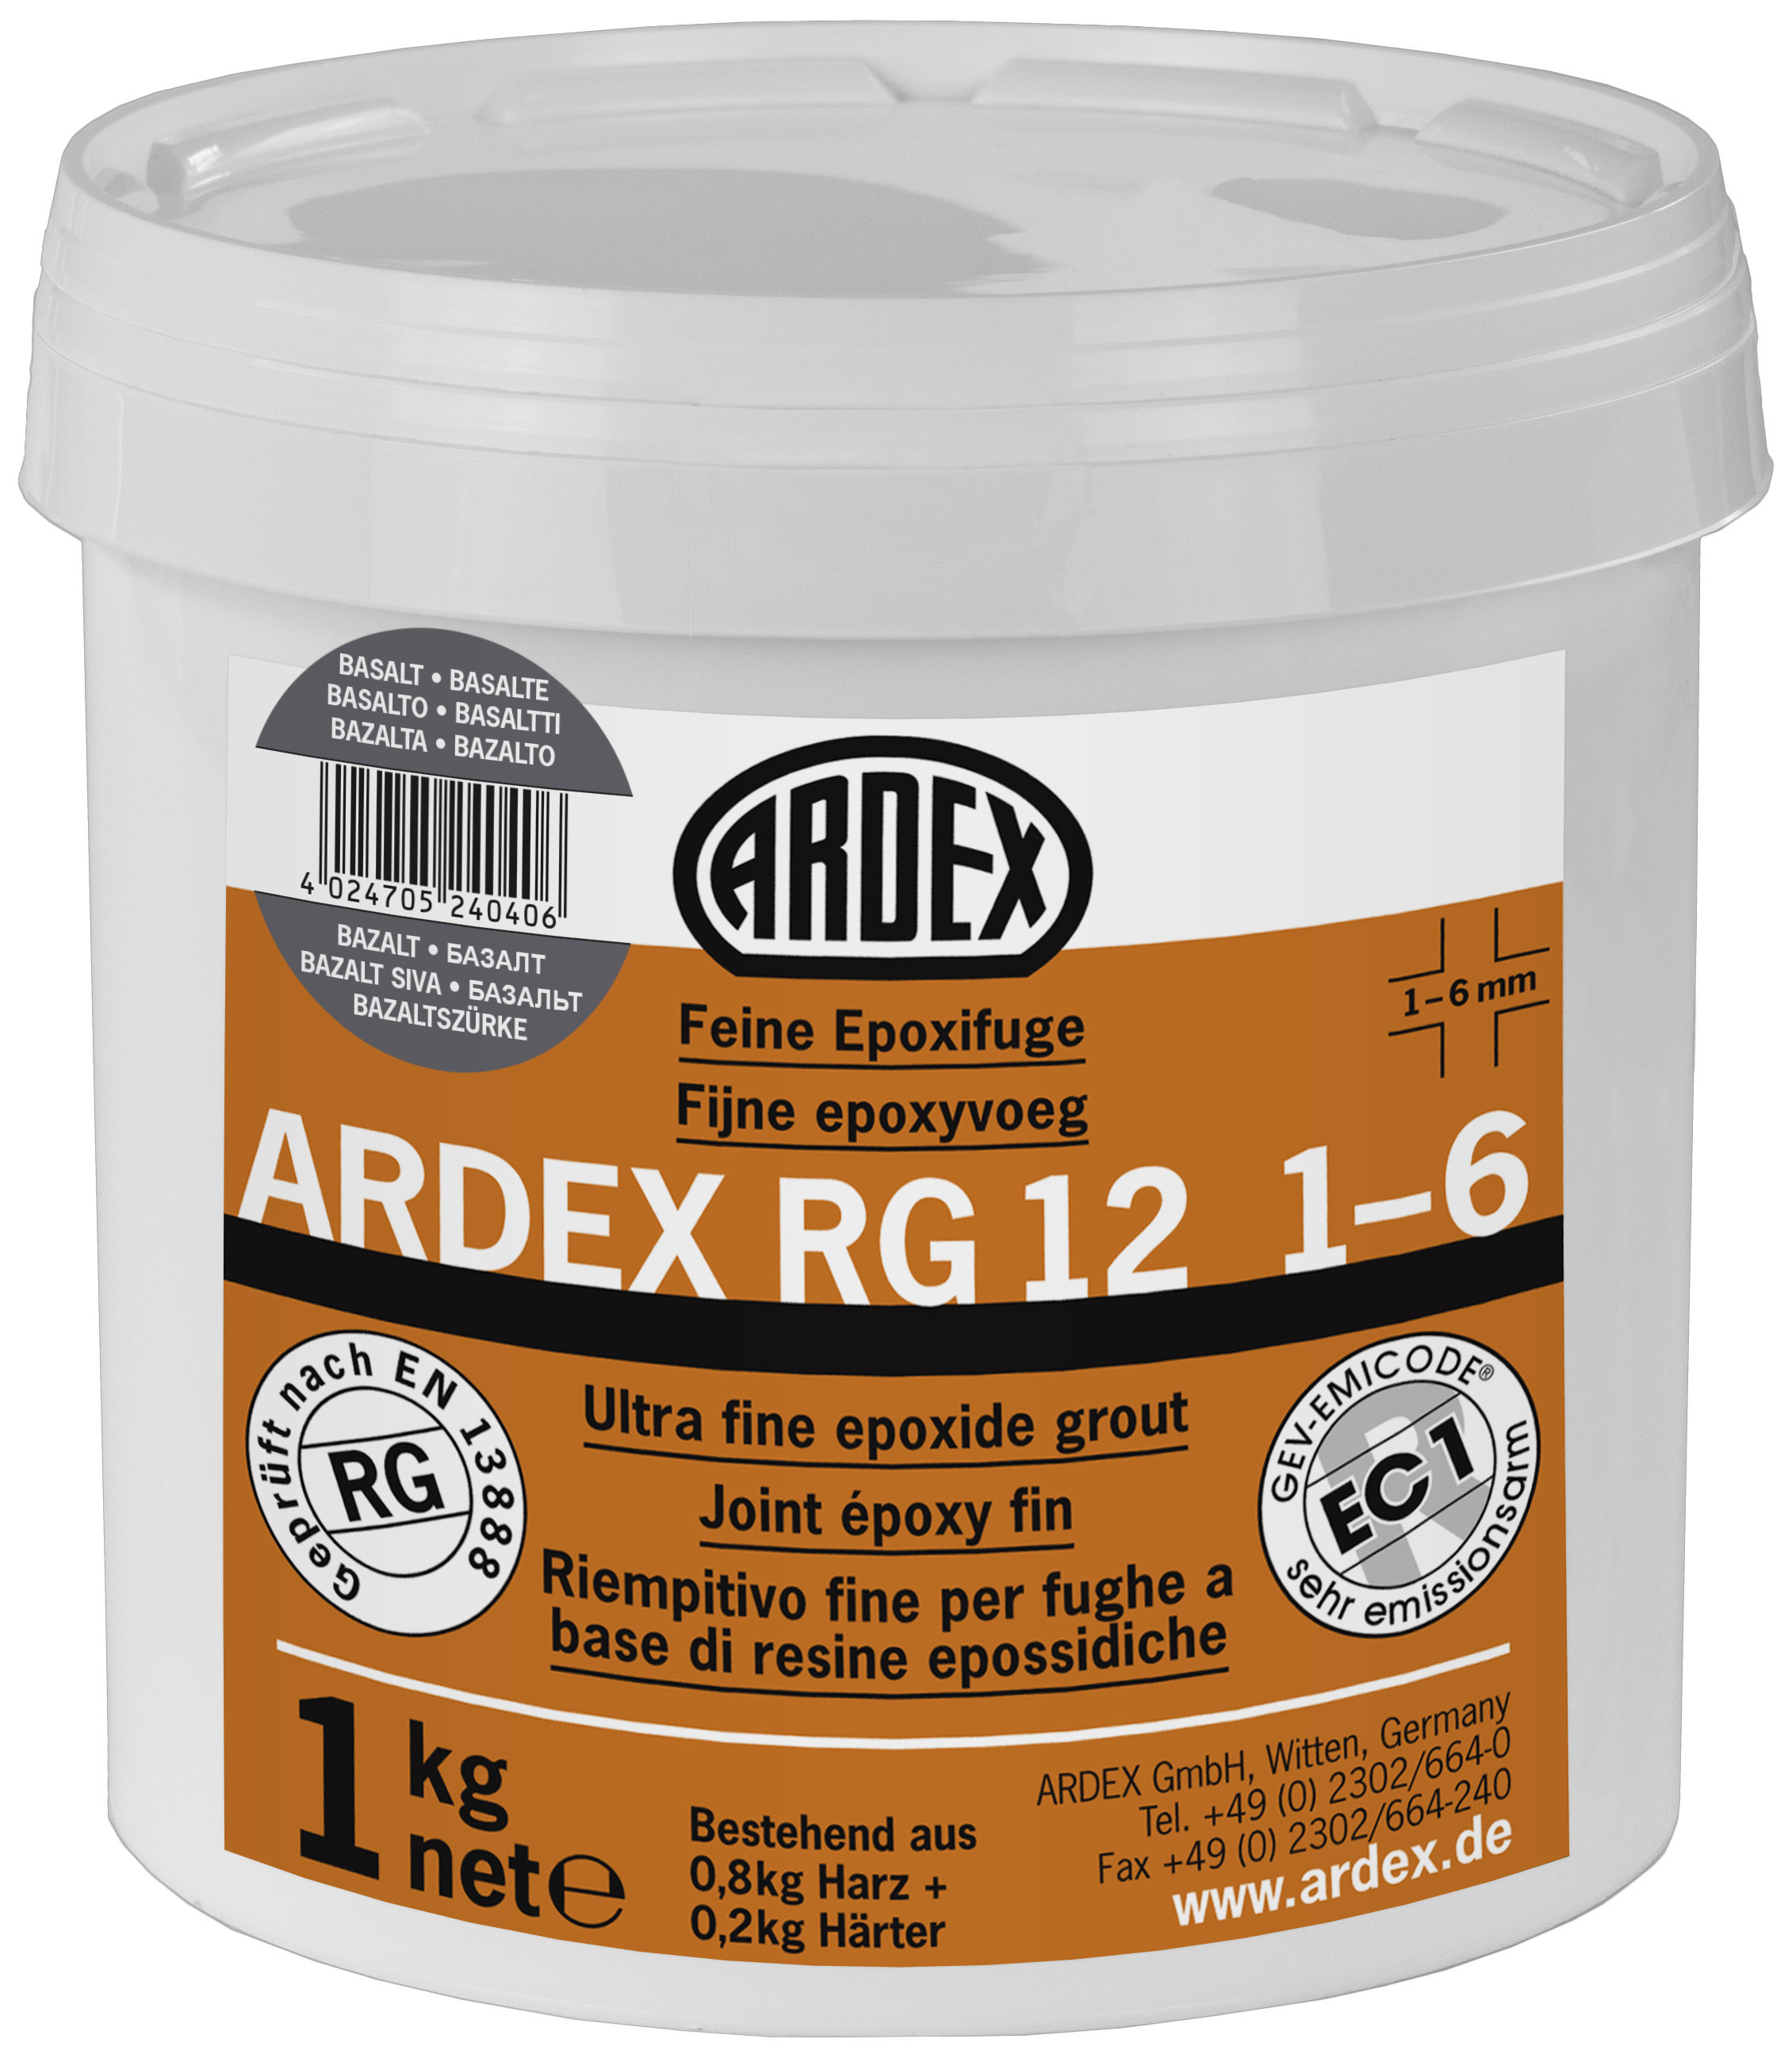 Ardex RG 12 Epoxifuge fein